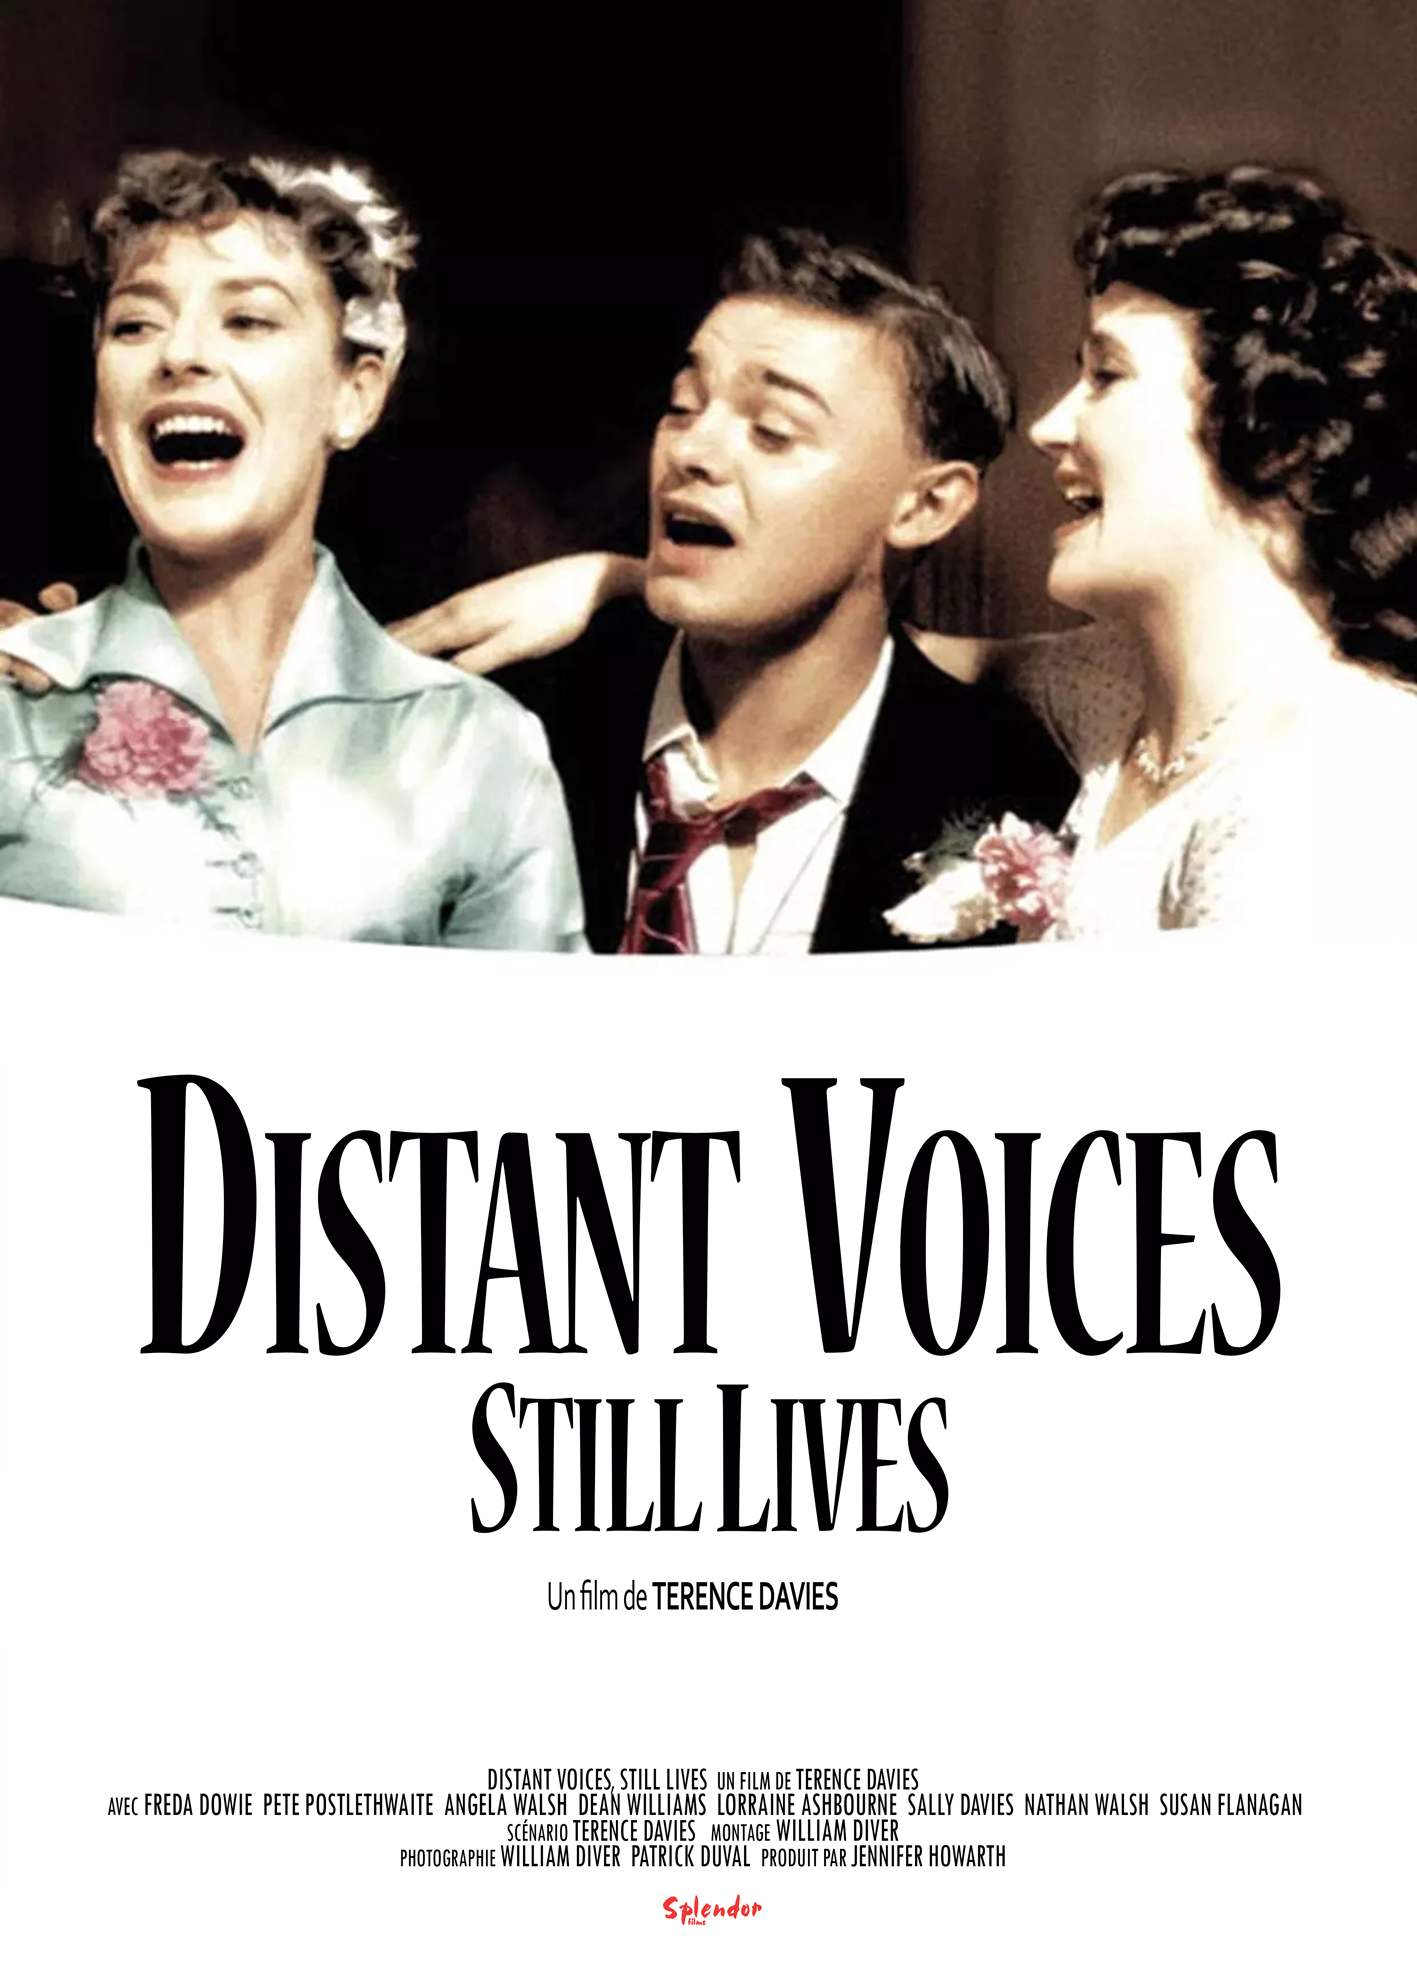 Distant voices still lives